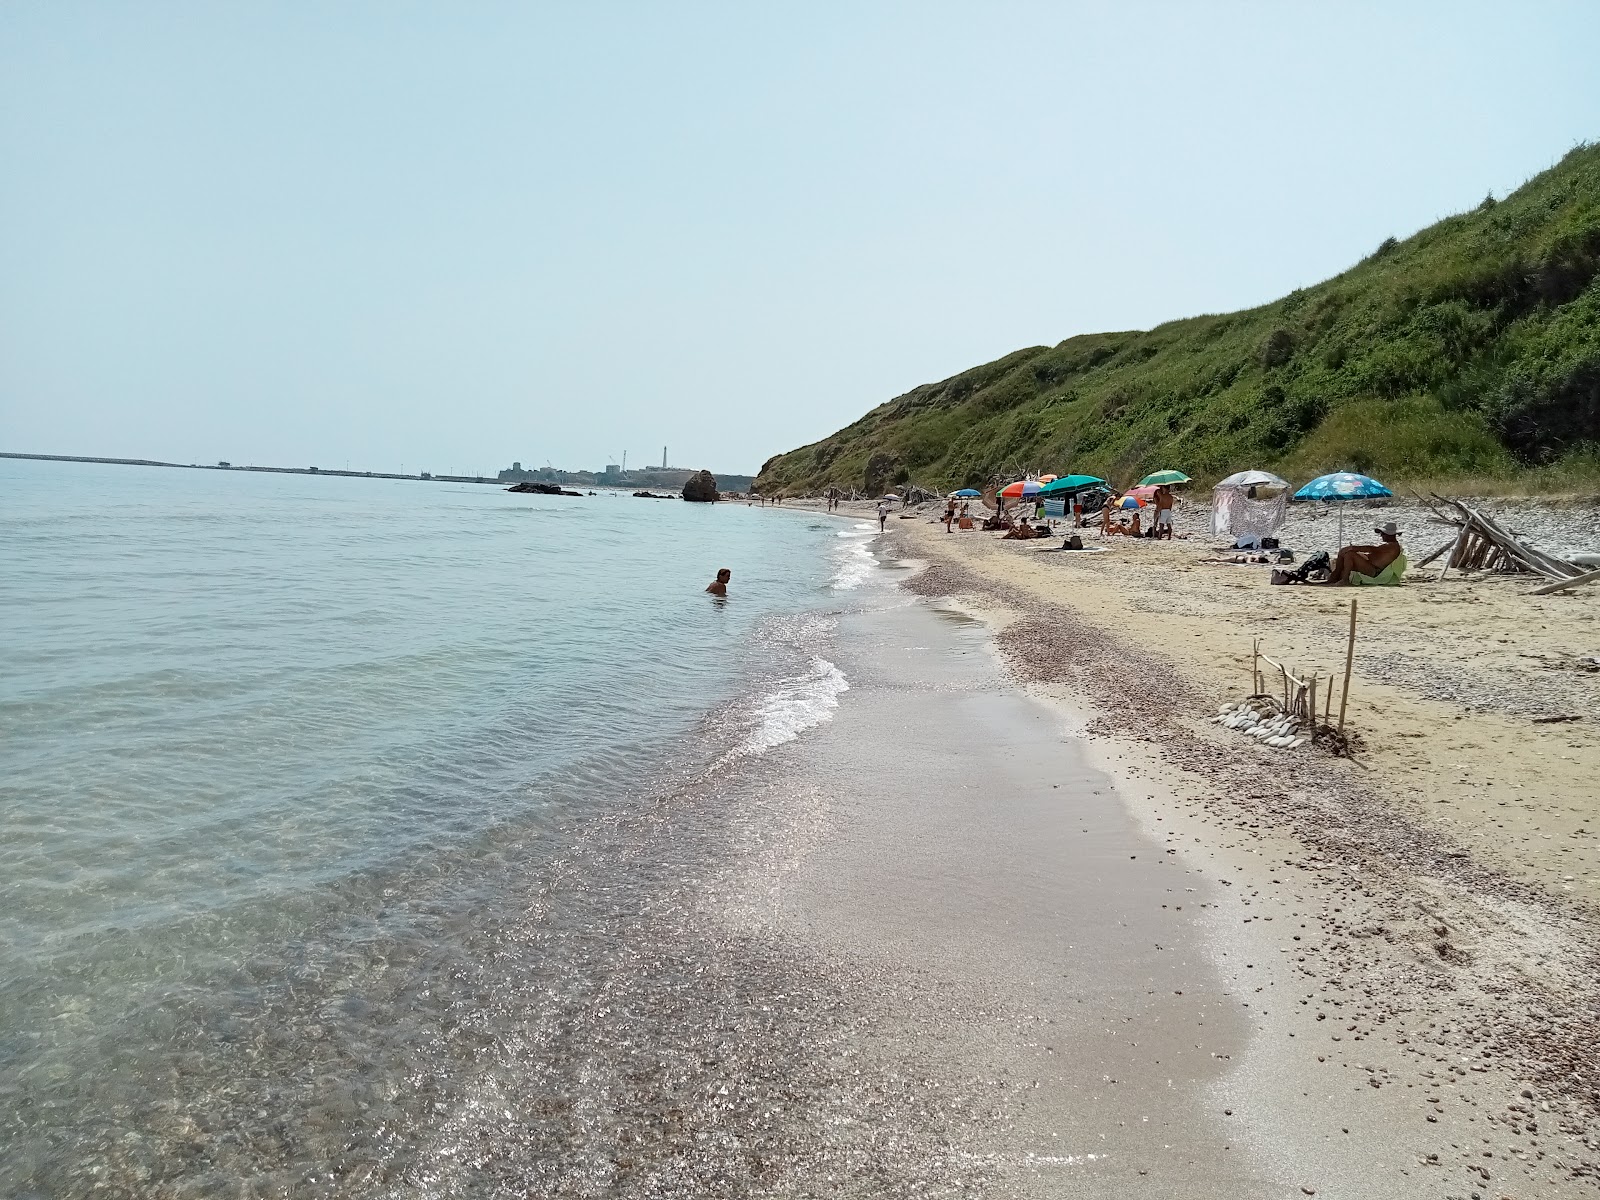 Foto de Spiaggia dei Libertini ubicado en área natural